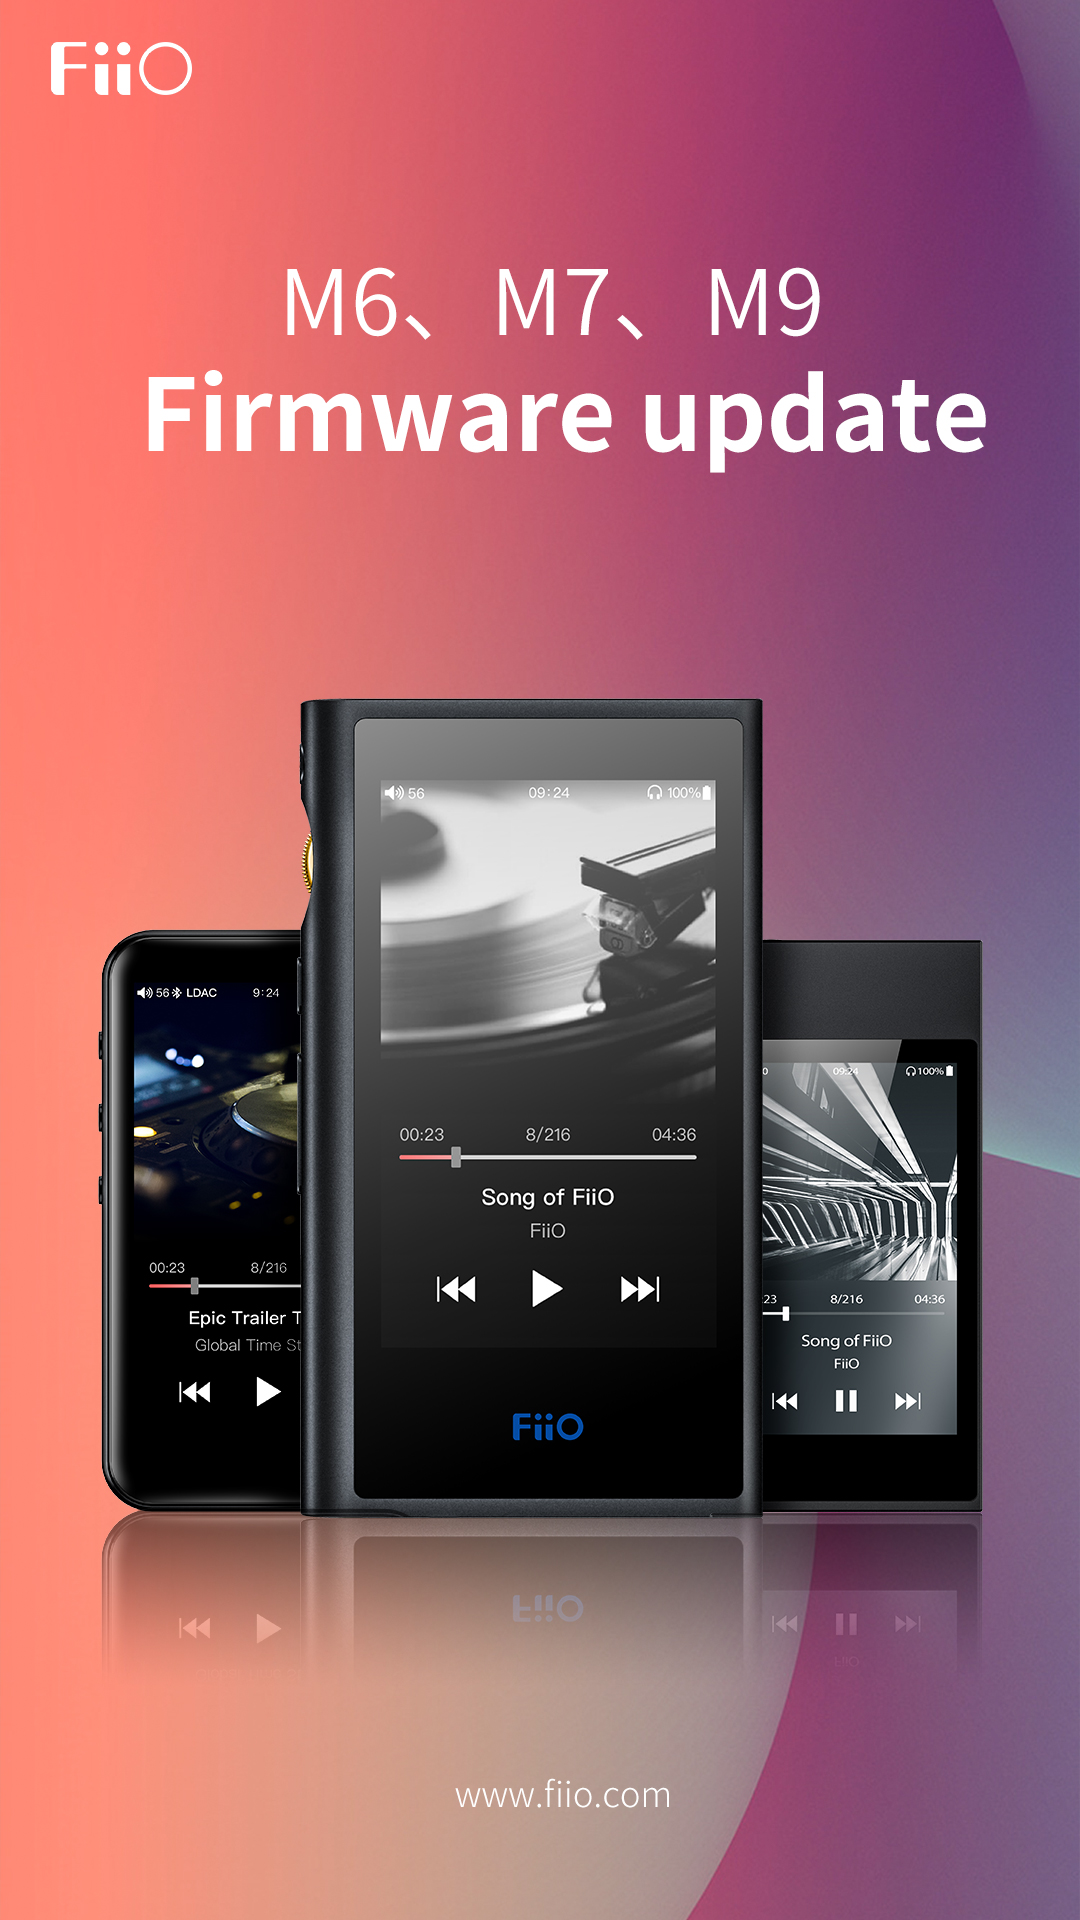 New Firmware] FiiO releases the new firmware for M6/7/9-FIIO ...